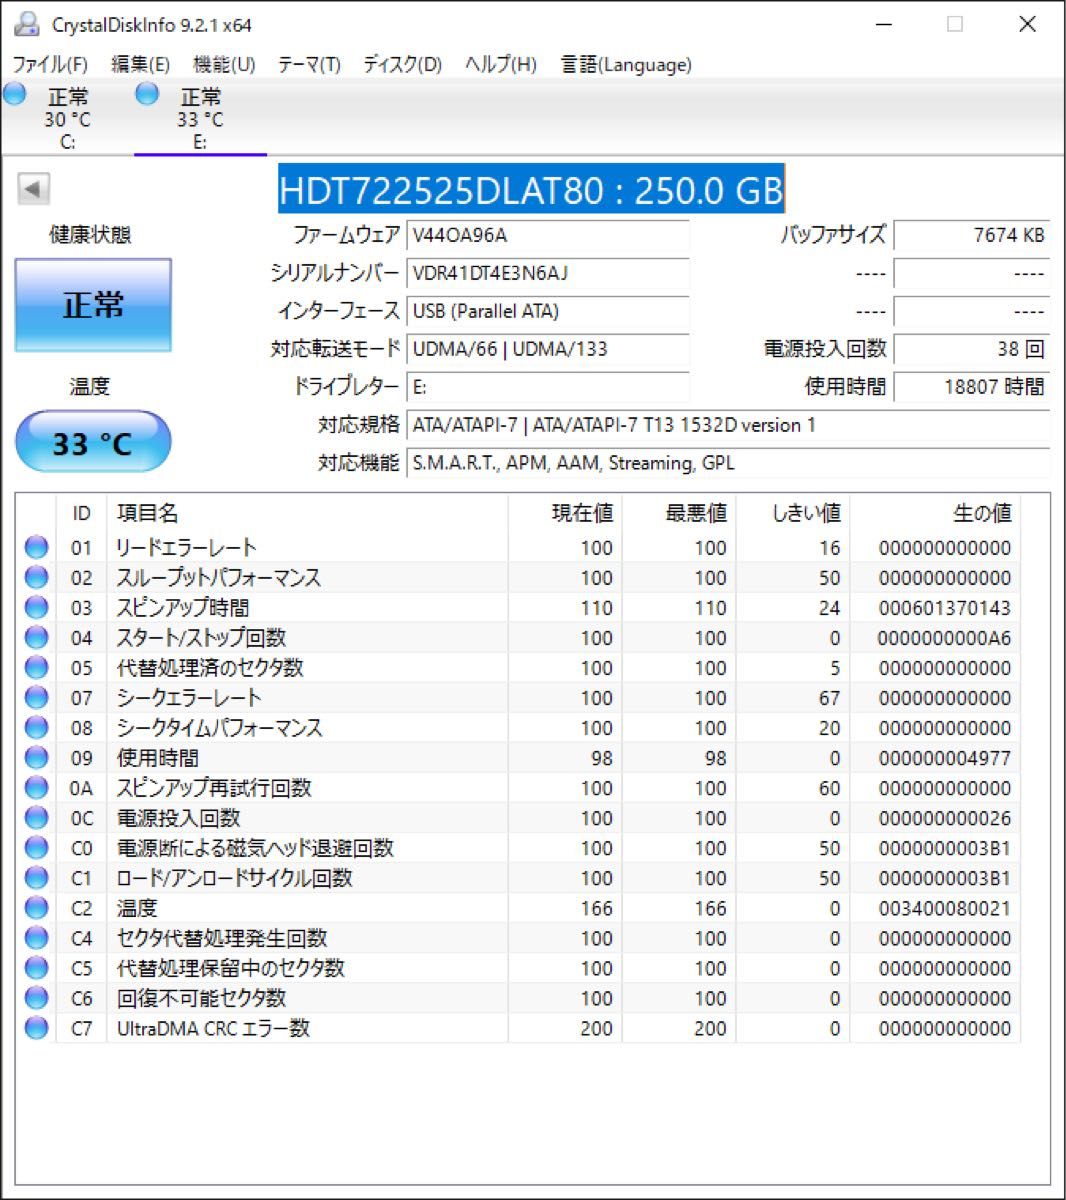 HITACHI Deskstar HDT722525DLAT80 250GB IDE 3.5インチ